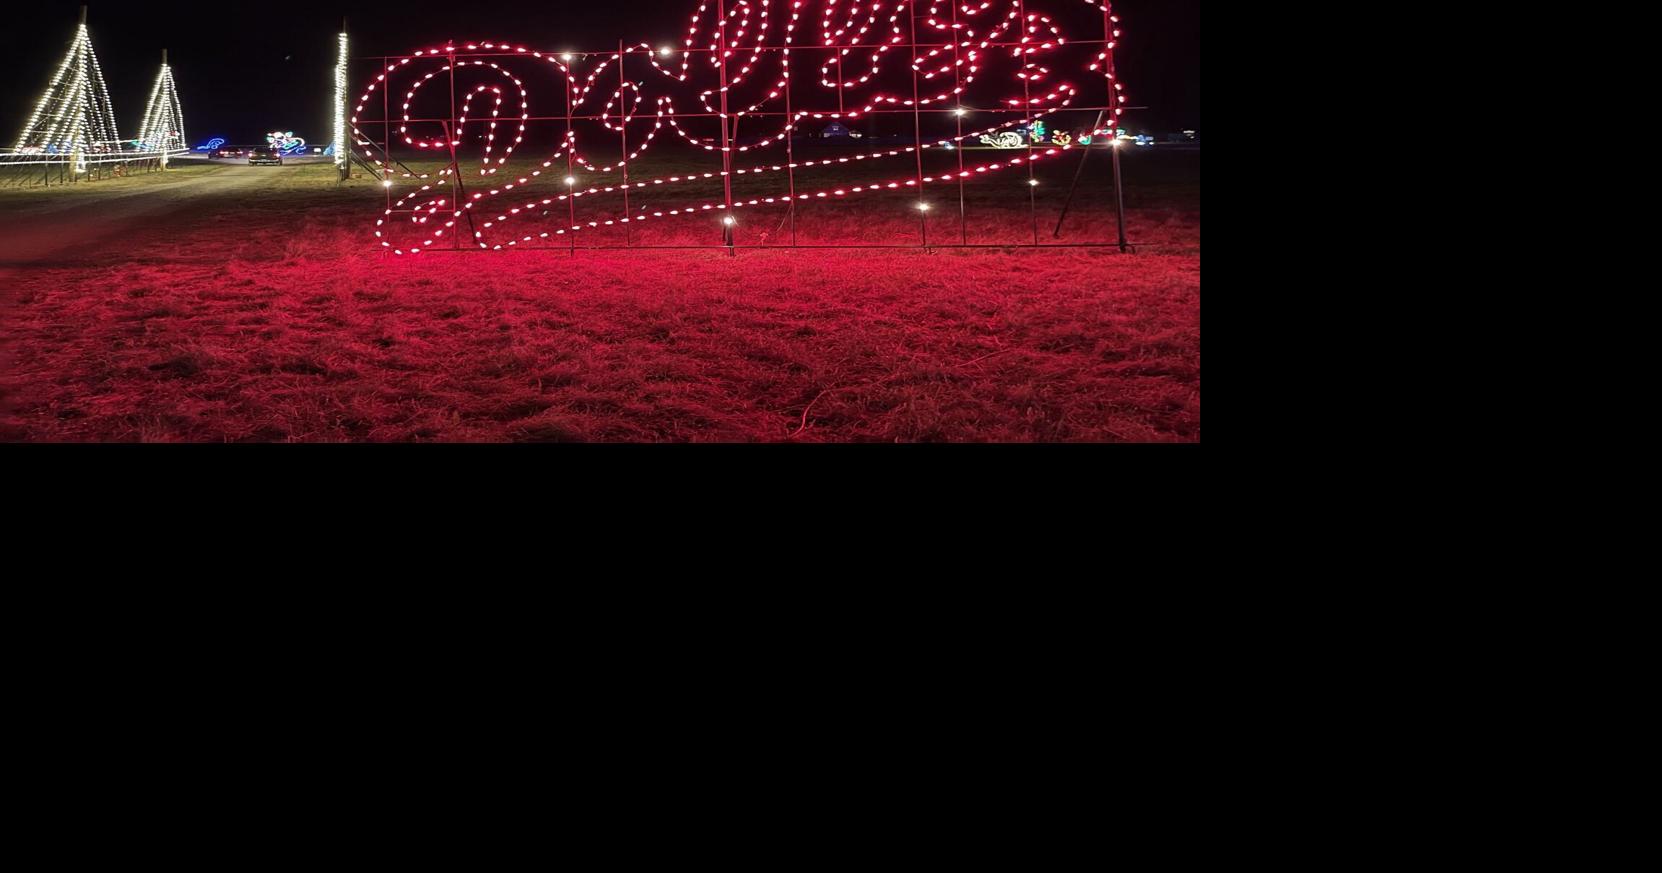 Delaware after dark: holiday light displays add sparkle